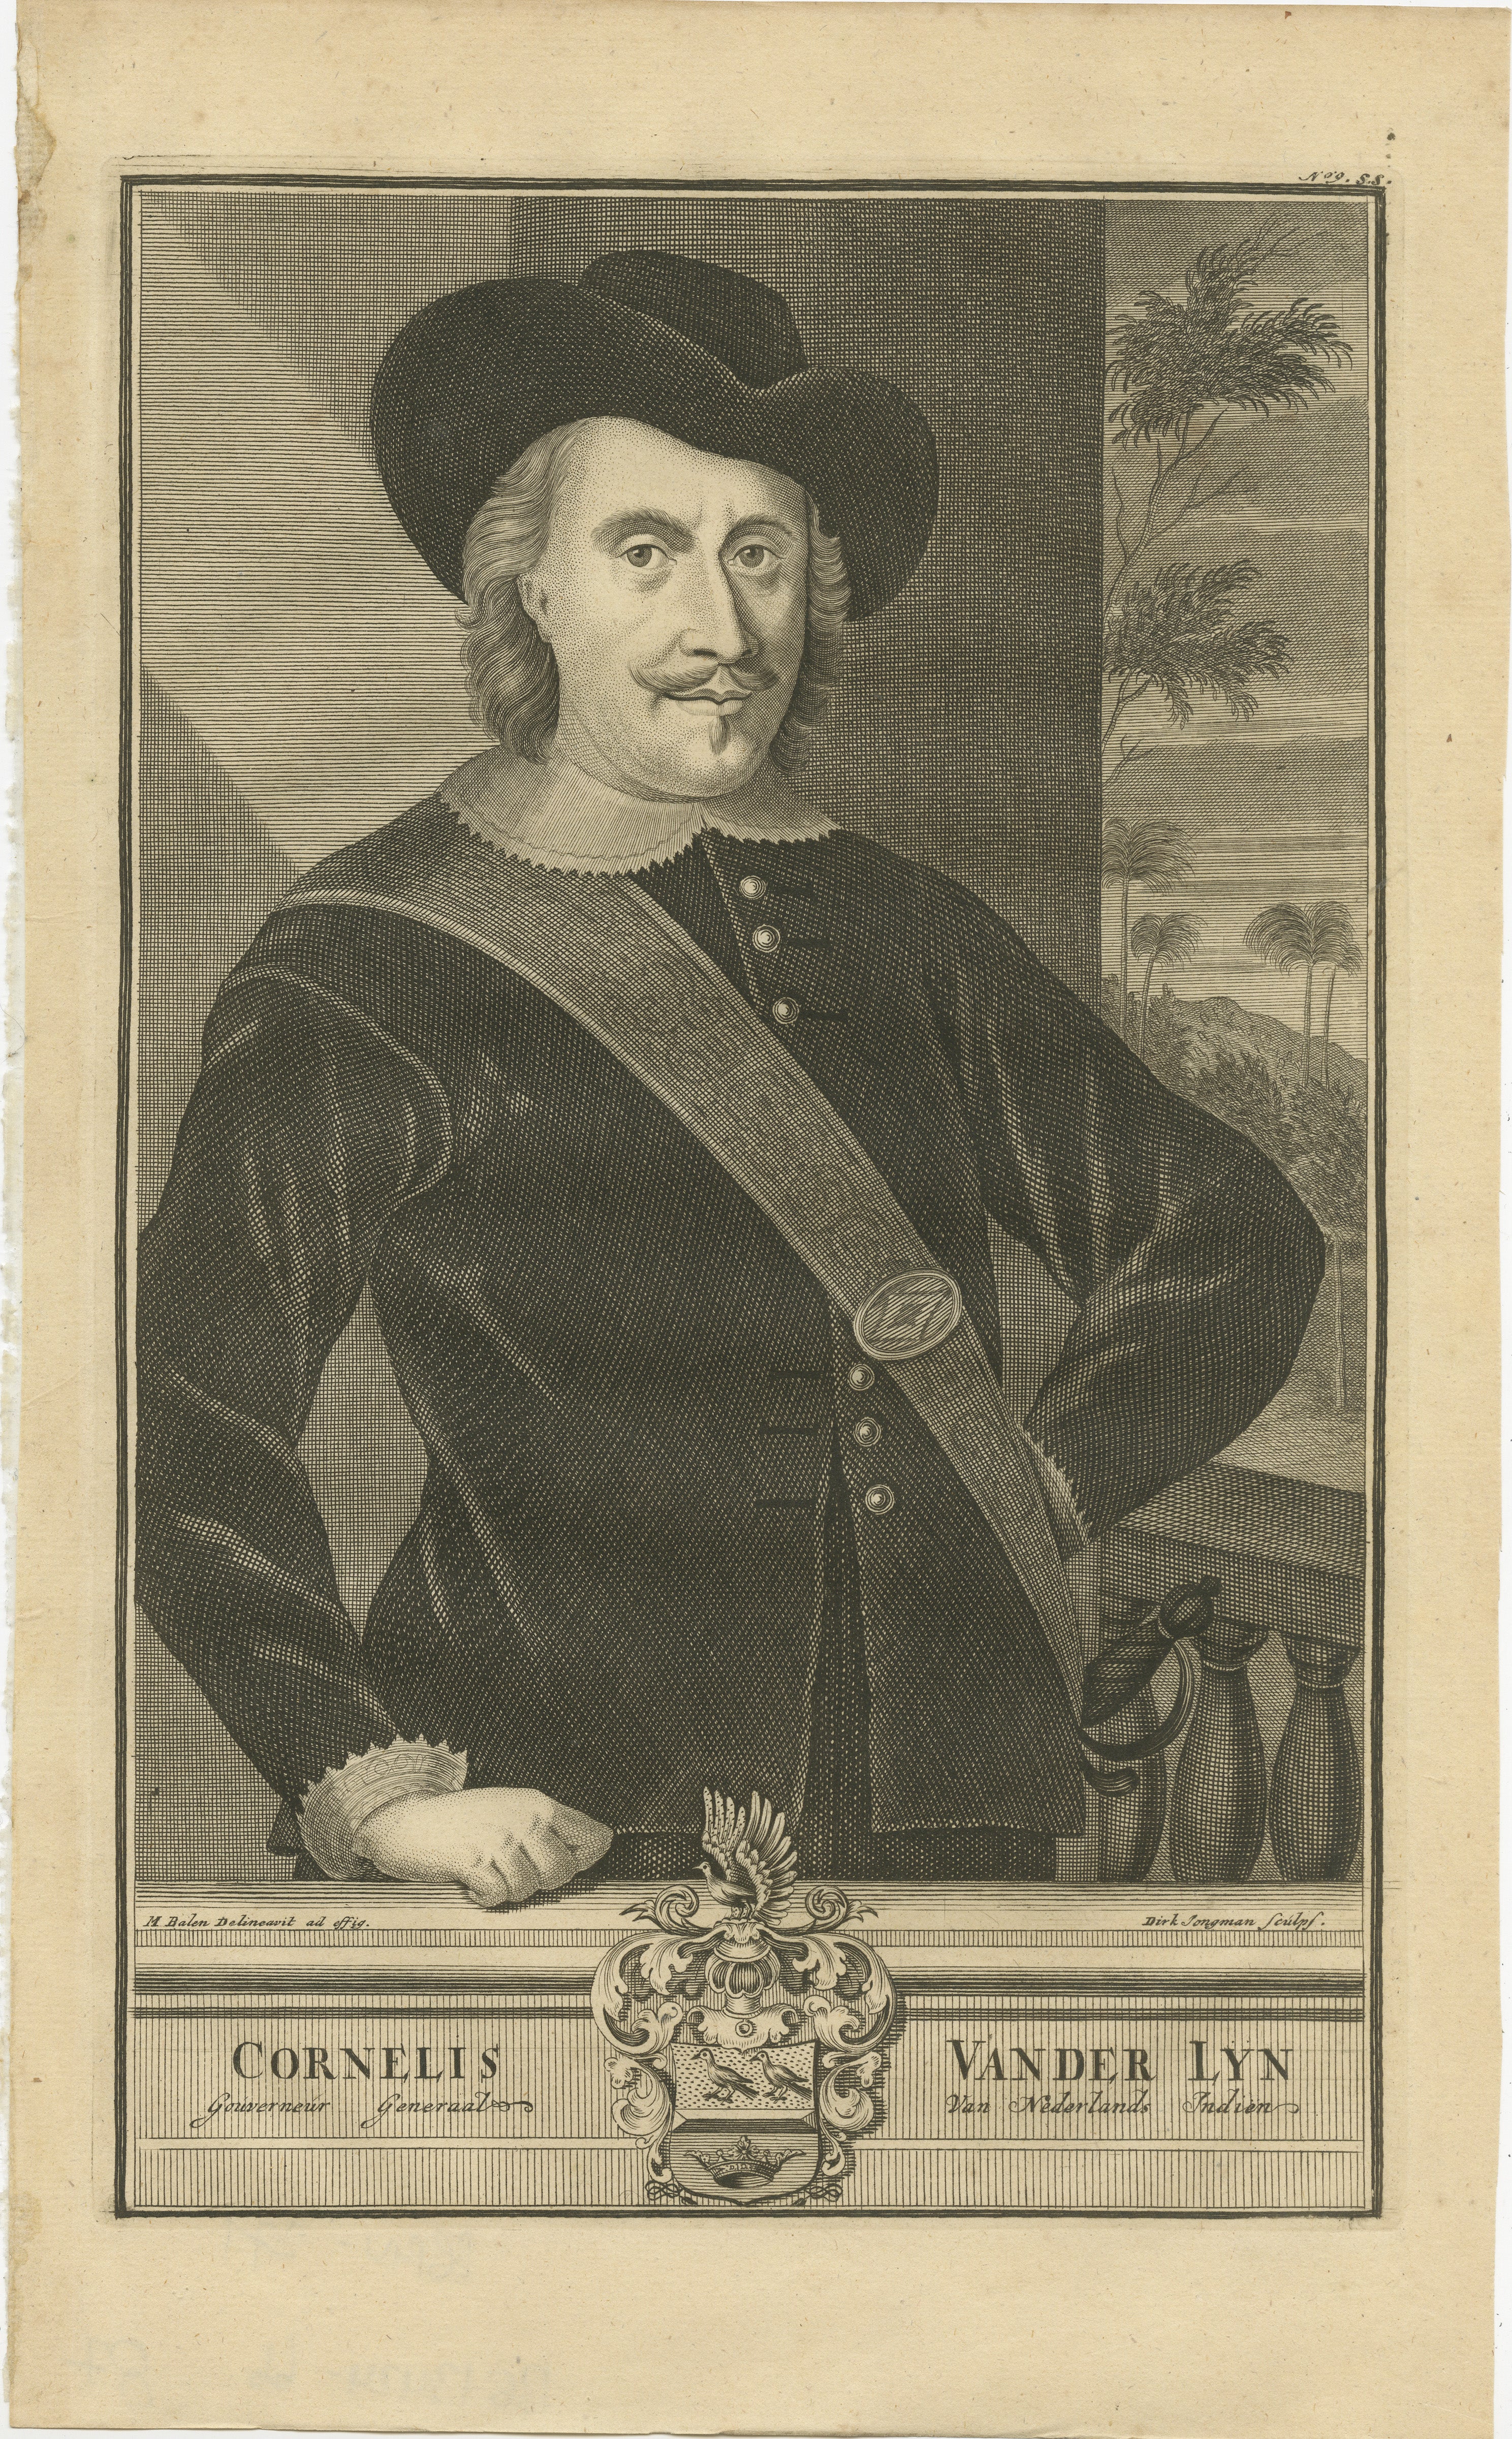 Cornelis van der Lyn, Gouverneur Generaal van Nederlands Indien
Copperplate engraving/etching on hand laid (verge) paper.

The image is an original antique print, a portrait of Cornelis van der Lijn (1608 – 1679), who was the Governor-General of the